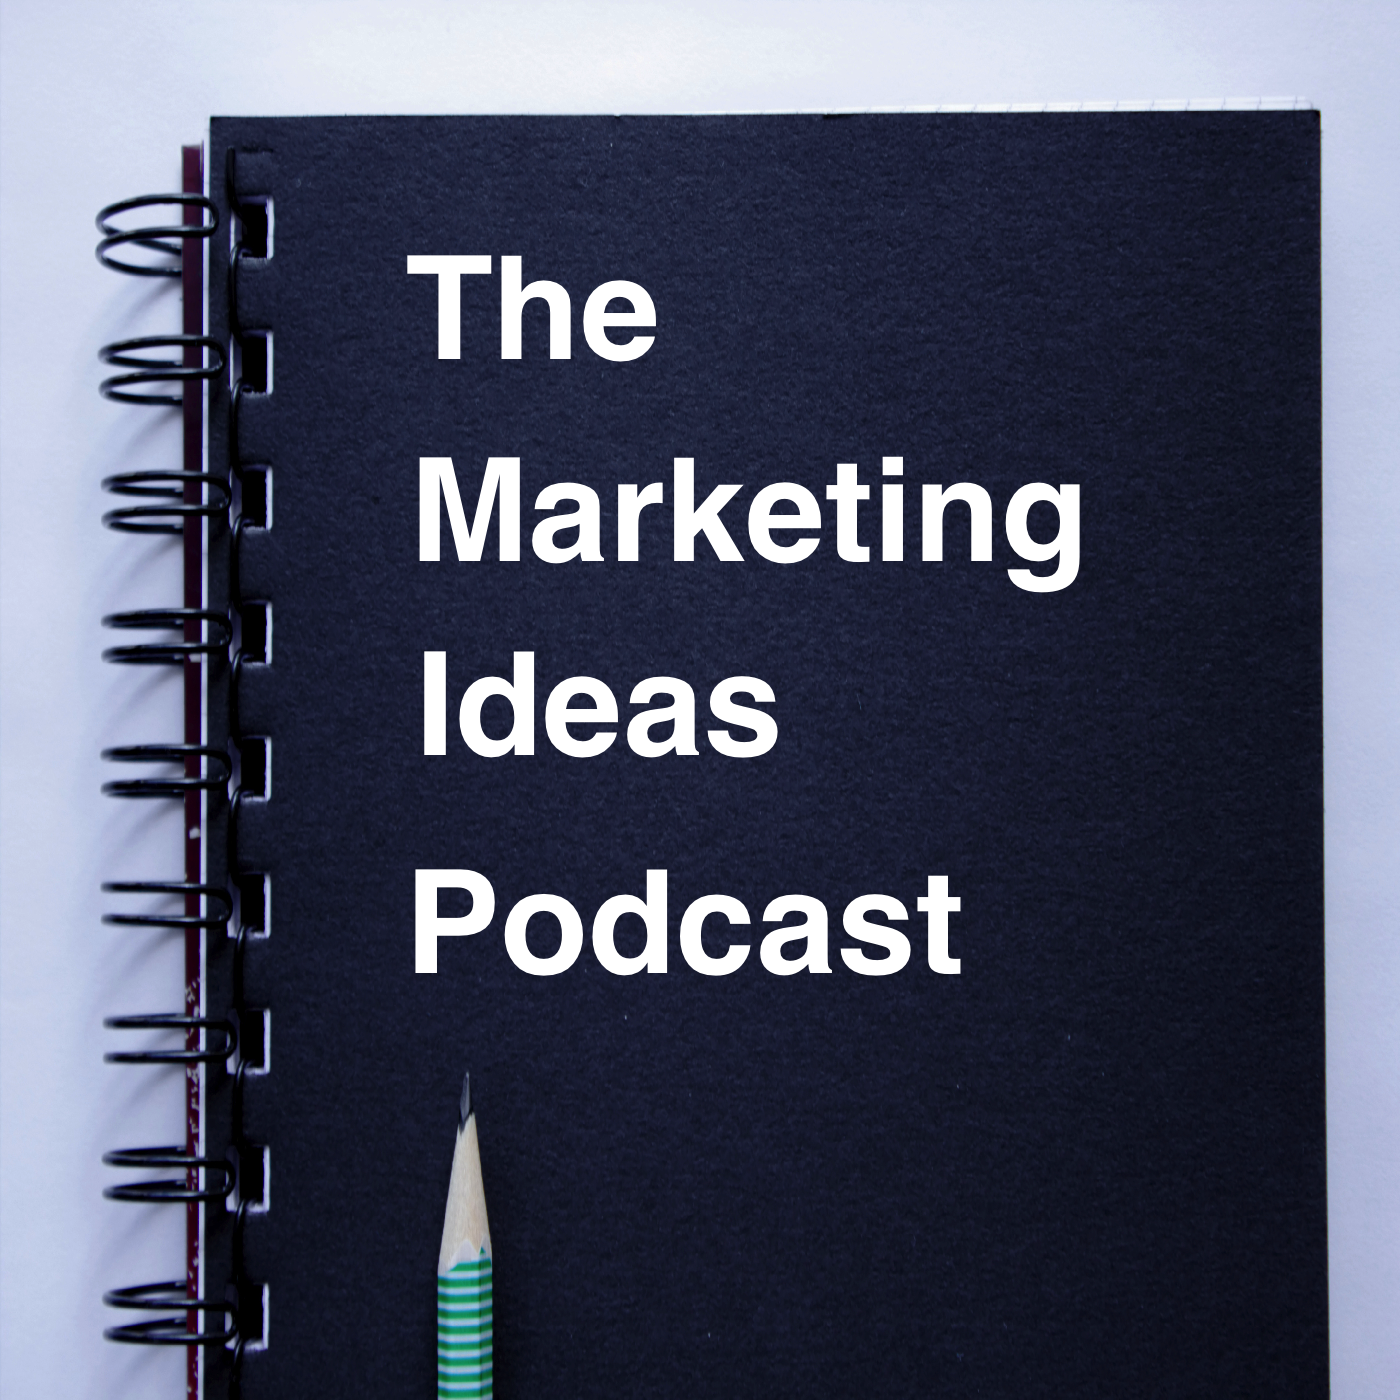 The Marketing Ideas Podcast